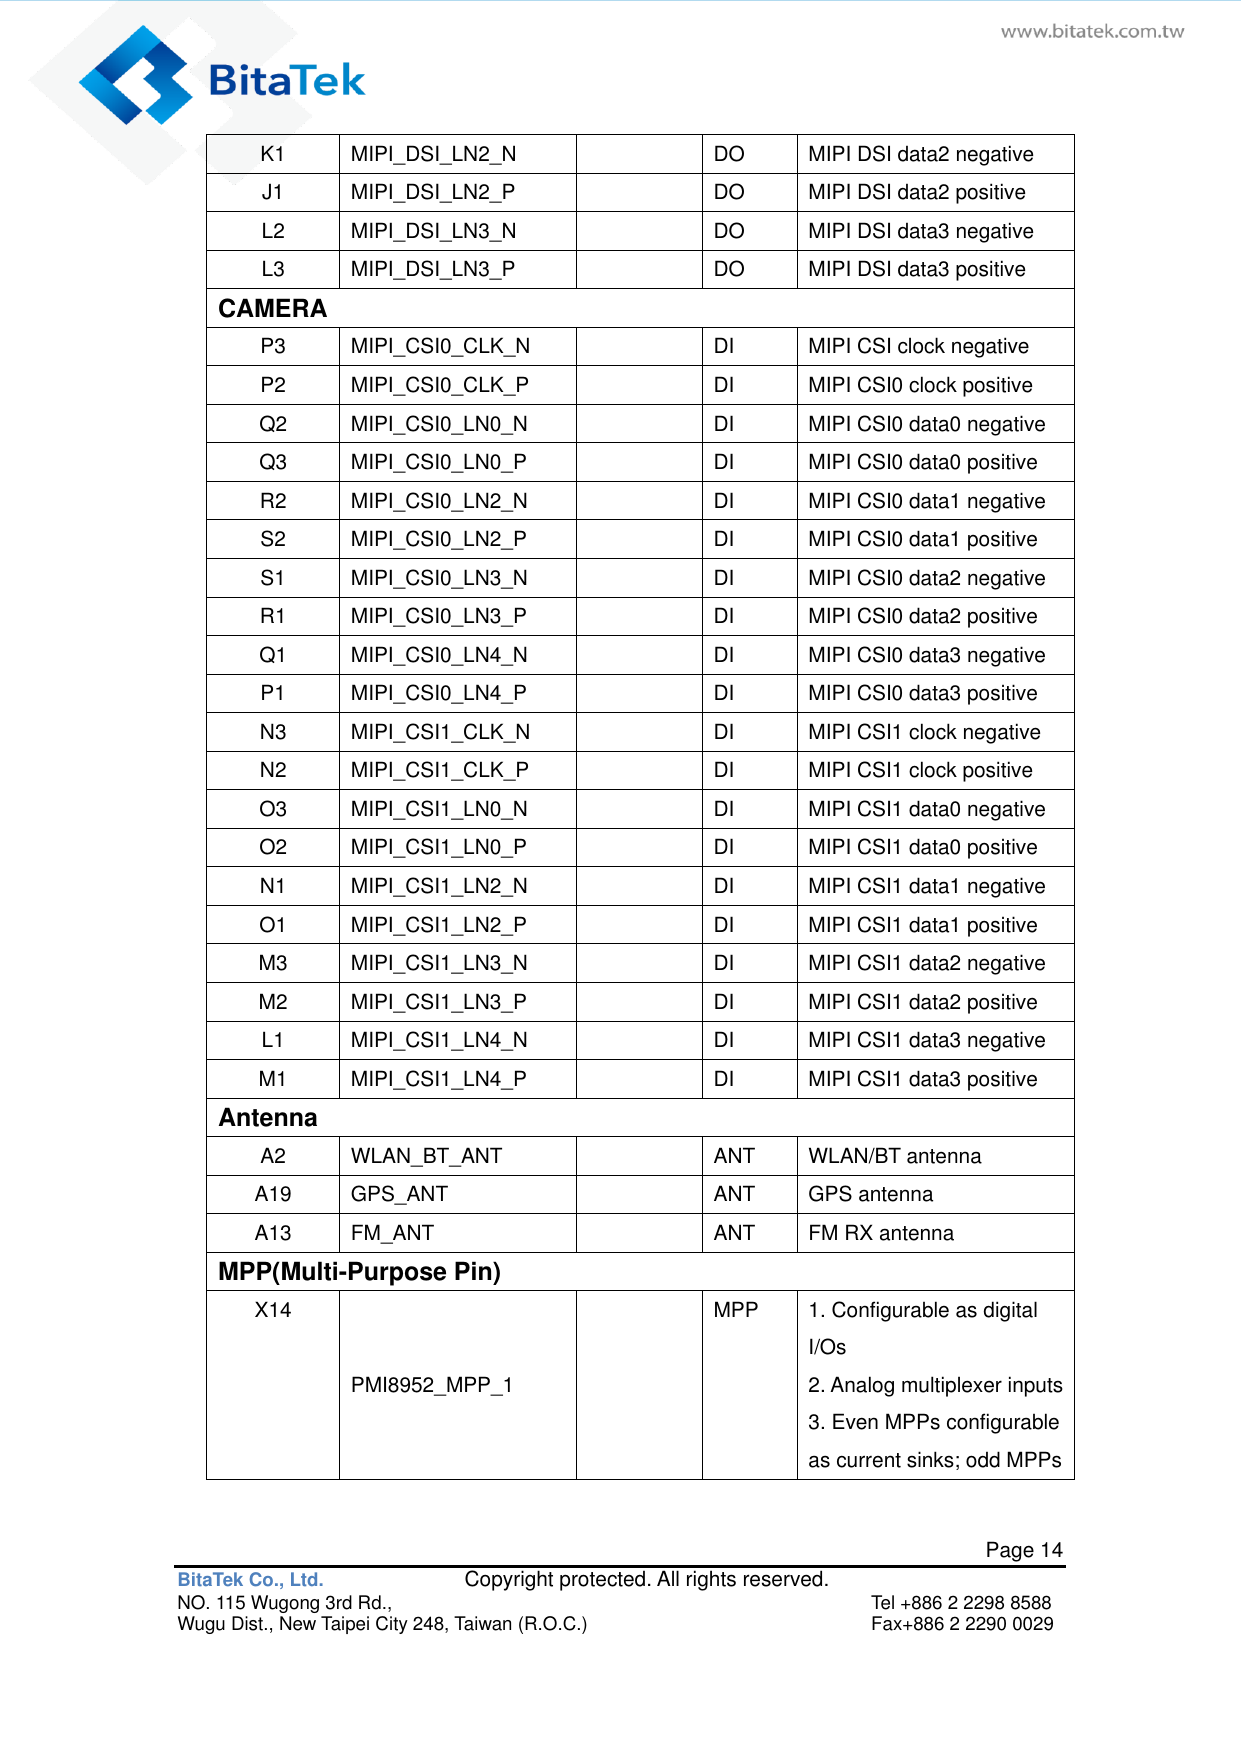   Page 14 BitaTek Co., Ltd.               Copyright protected. All rights reserved. NO. 115 Wugong 3rd Rd.,  Tel +886 2 2298 8588 Wugu Dist., New Taipei City 248, Taiwan (R.O.C.)  Fax+886 2 2290 0029 K1 MIPI_DSI_LN2_N  DO MIPI DSI data2 negative J1 MIPI_DSI_LN2_P  DO MIPI DSI data2 positive L2 MIPI_DSI_LN3_N  DO MIPI DSI data3 negative L3 MIPI_DSI_LN3_P  DO MIPI DSI data3 positive CAMERA P3 MIPI_CSI0_CLK_N  DI MIPI CSI clock negative P2 MIPI_CSI0_CLK_P  DI MIPI CSI0 clock positive Q2 MIPI_CSI0_LN0_N  DI MIPI CSI0 data0 negative Q3 MIPI_CSI0_LN0_P  DI MIPI CSI0 data0 positive R2 MIPI_CSI0_LN2_N  DI MIPI CSI0 data1 negative S2 MIPI_CSI0_LN2_P  DI MIPI CSI0 data1 positive S1 MIPI_CSI0_LN3_N  DI MIPI CSI0 data2 negative R1 MIPI_CSI0_LN3_P  DI MIPI CSI0 data2 positive Q1 MIPI_CSI0_LN4_N  DI MIPI CSI0 data3 negative P1 MIPI_CSI0_LN4_P  DI MIPI CSI0 data3 positive N3 MIPI_CSI1_CLK_N  DI MIPI CSI1 clock negative N2 MIPI_CSI1_CLK_P  DI MIPI CSI1 clock positive O3 MIPI_CSI1_LN0_N  DI MIPI CSI1 data0 negative O2 MIPI_CSI1_LN0_P  DI MIPI CSI1 data0 positive N1 MIPI_CSI1_LN2_N  DI MIPI CSI1 data1 negative O1 MIPI_CSI1_LN2_P  DI MIPI CSI1 data1 positive M3 MIPI_CSI1_LN3_N  DI MIPI CSI1 data2 negative M2 MIPI_CSI1_LN3_P  DI MIPI CSI1 data2 positive L1 MIPI_CSI1_LN4_N  DI MIPI CSI1 data3 negative M1 MIPI_CSI1_LN4_P  DI MIPI CSI1 data3 positive Antenna A2 WLAN_BT_ANT  ANT WLAN/BT antenna A19 GPS_ANT  ANT GPS antenna A13 FM_ANT  ANT FM RX antenna MPP(Multi-Purpose Pin) X14 PMI8952_MPP_1  MPP 1. Configurable as digital I/Os   2. Analog multiplexer inputs 3. Even MPPs configurable as current sinks; odd MPPs 